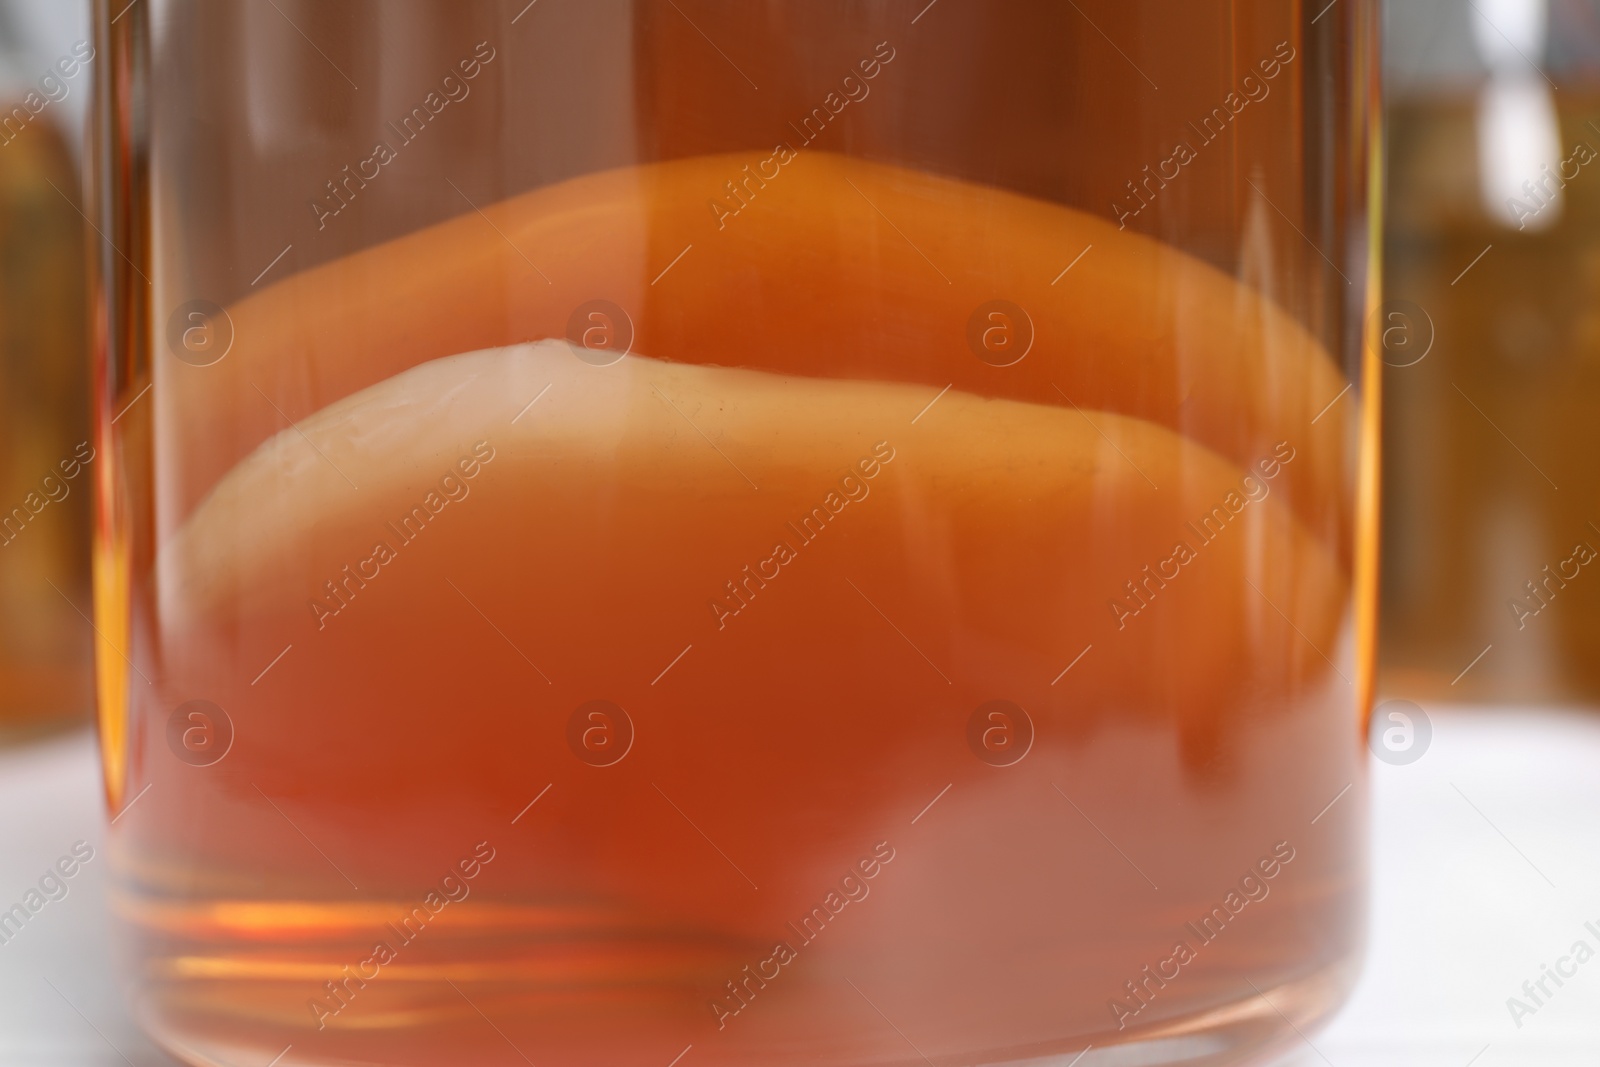 Photo of Homemade fermented kombucha with fungus mushrooms in glass jar on blurred background, closeup